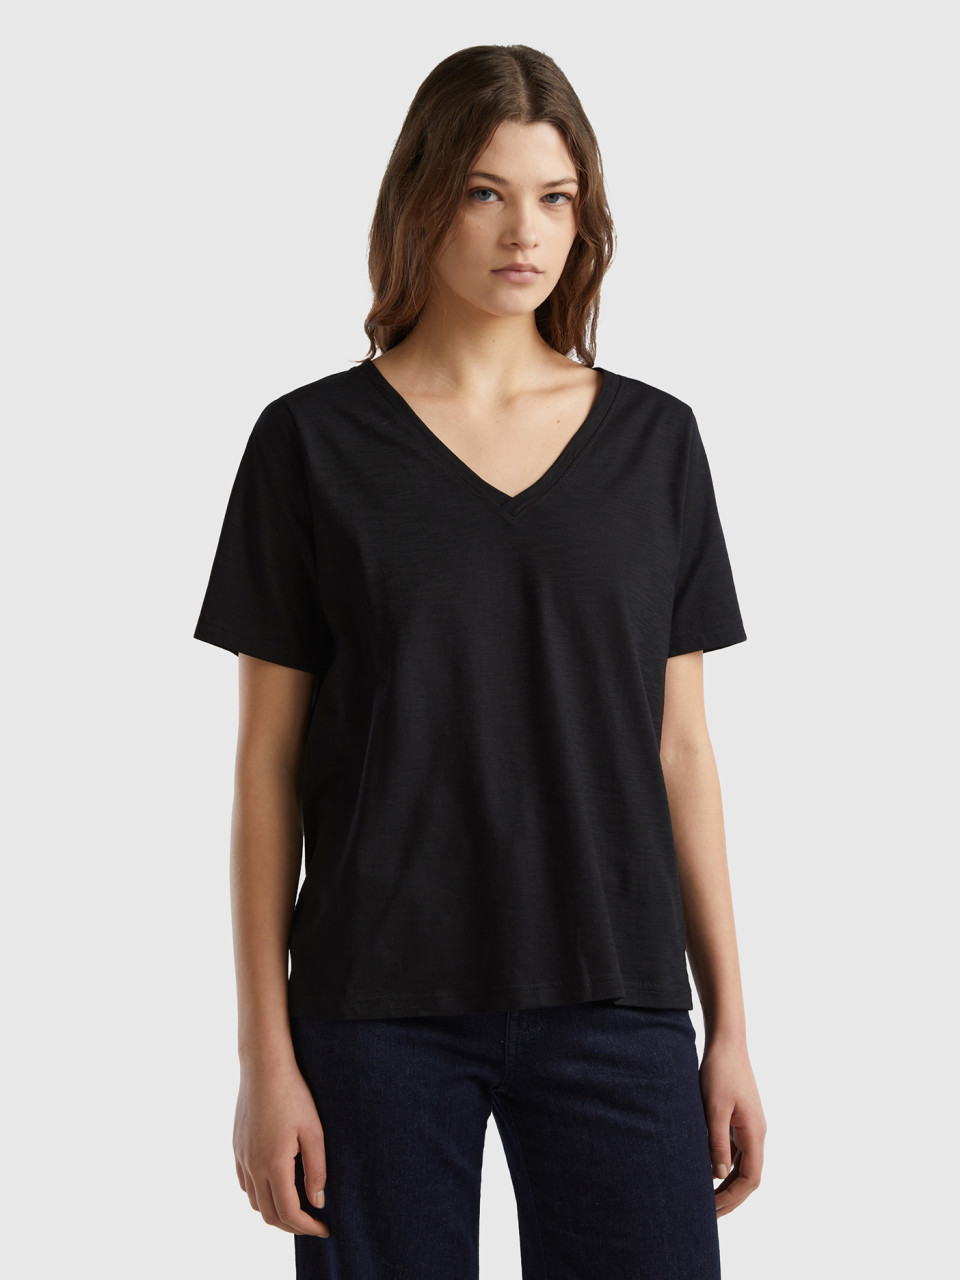 Benetton, Geflammtes Baumwoll-t-shirt Mit V-ausschnitt, Schwarz, female